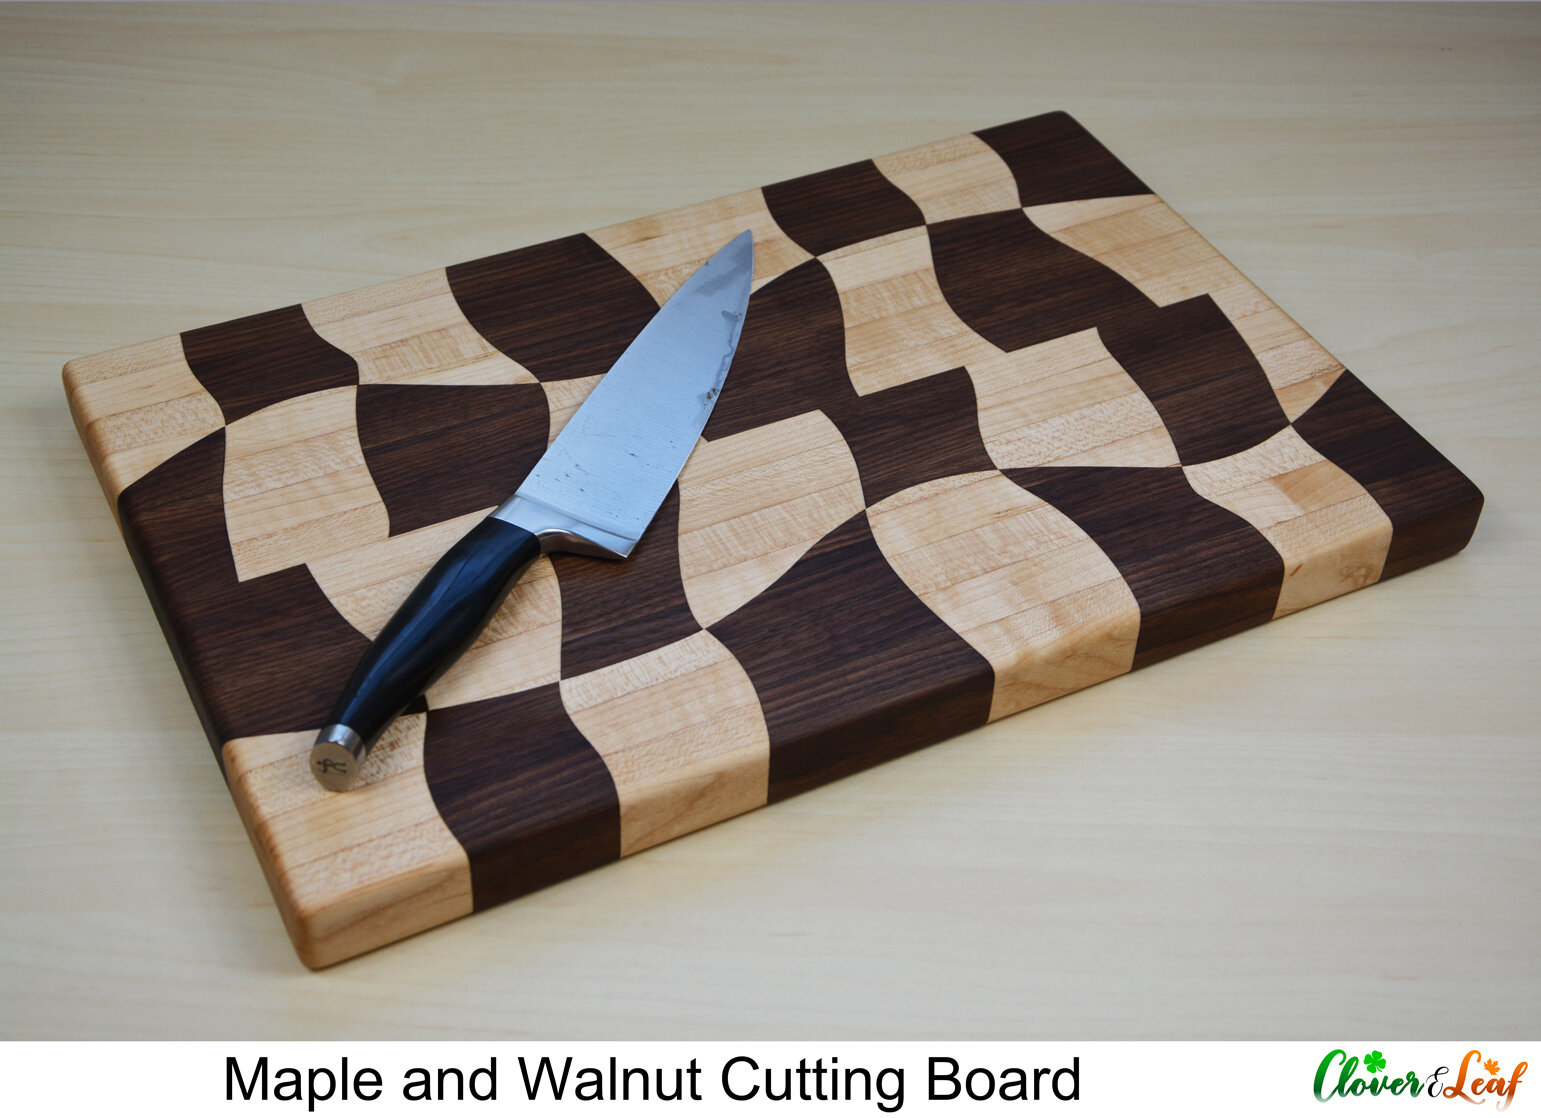 Board with Knife.jpg